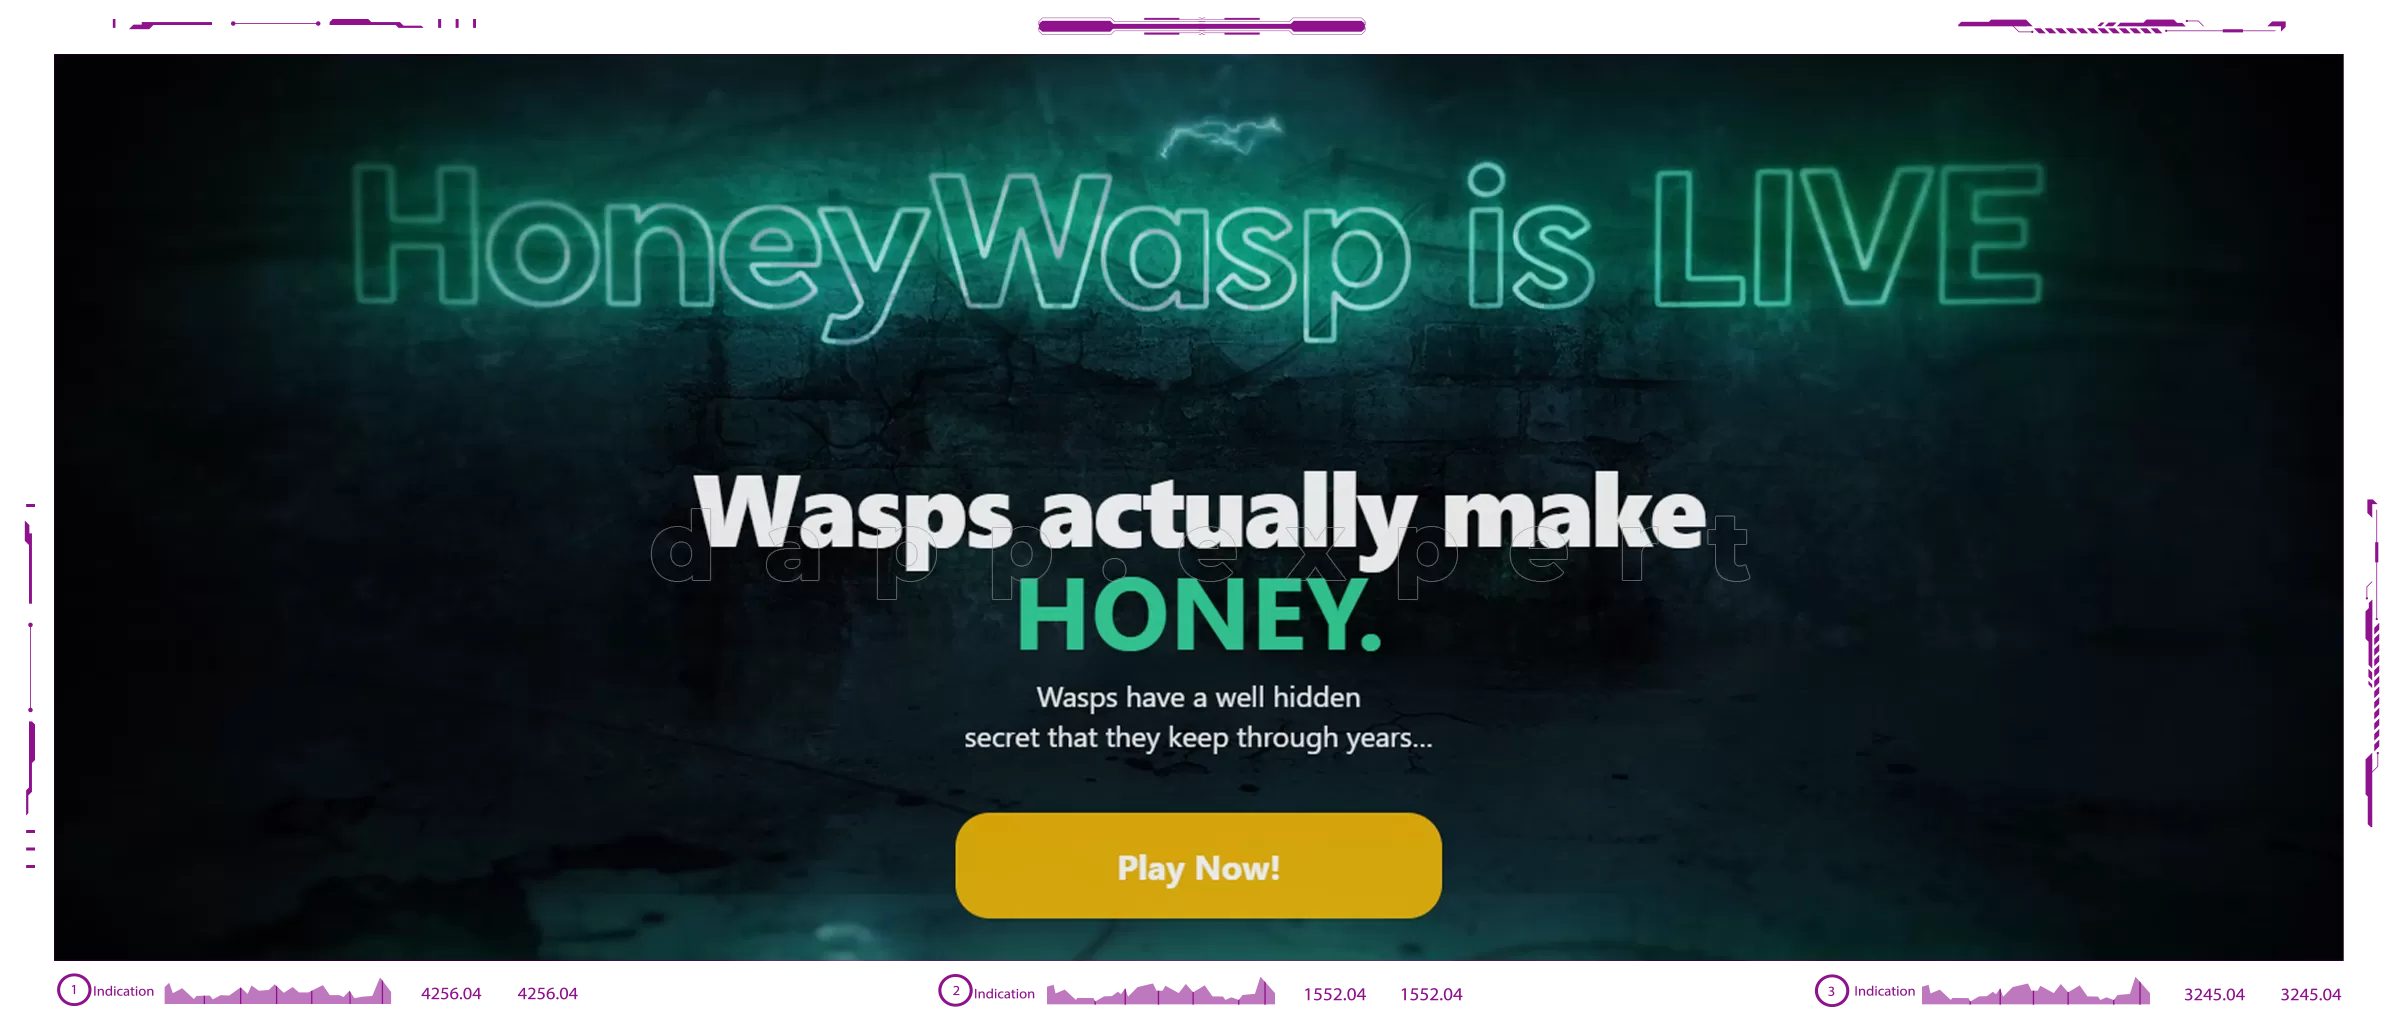 HoneyWasp dapps